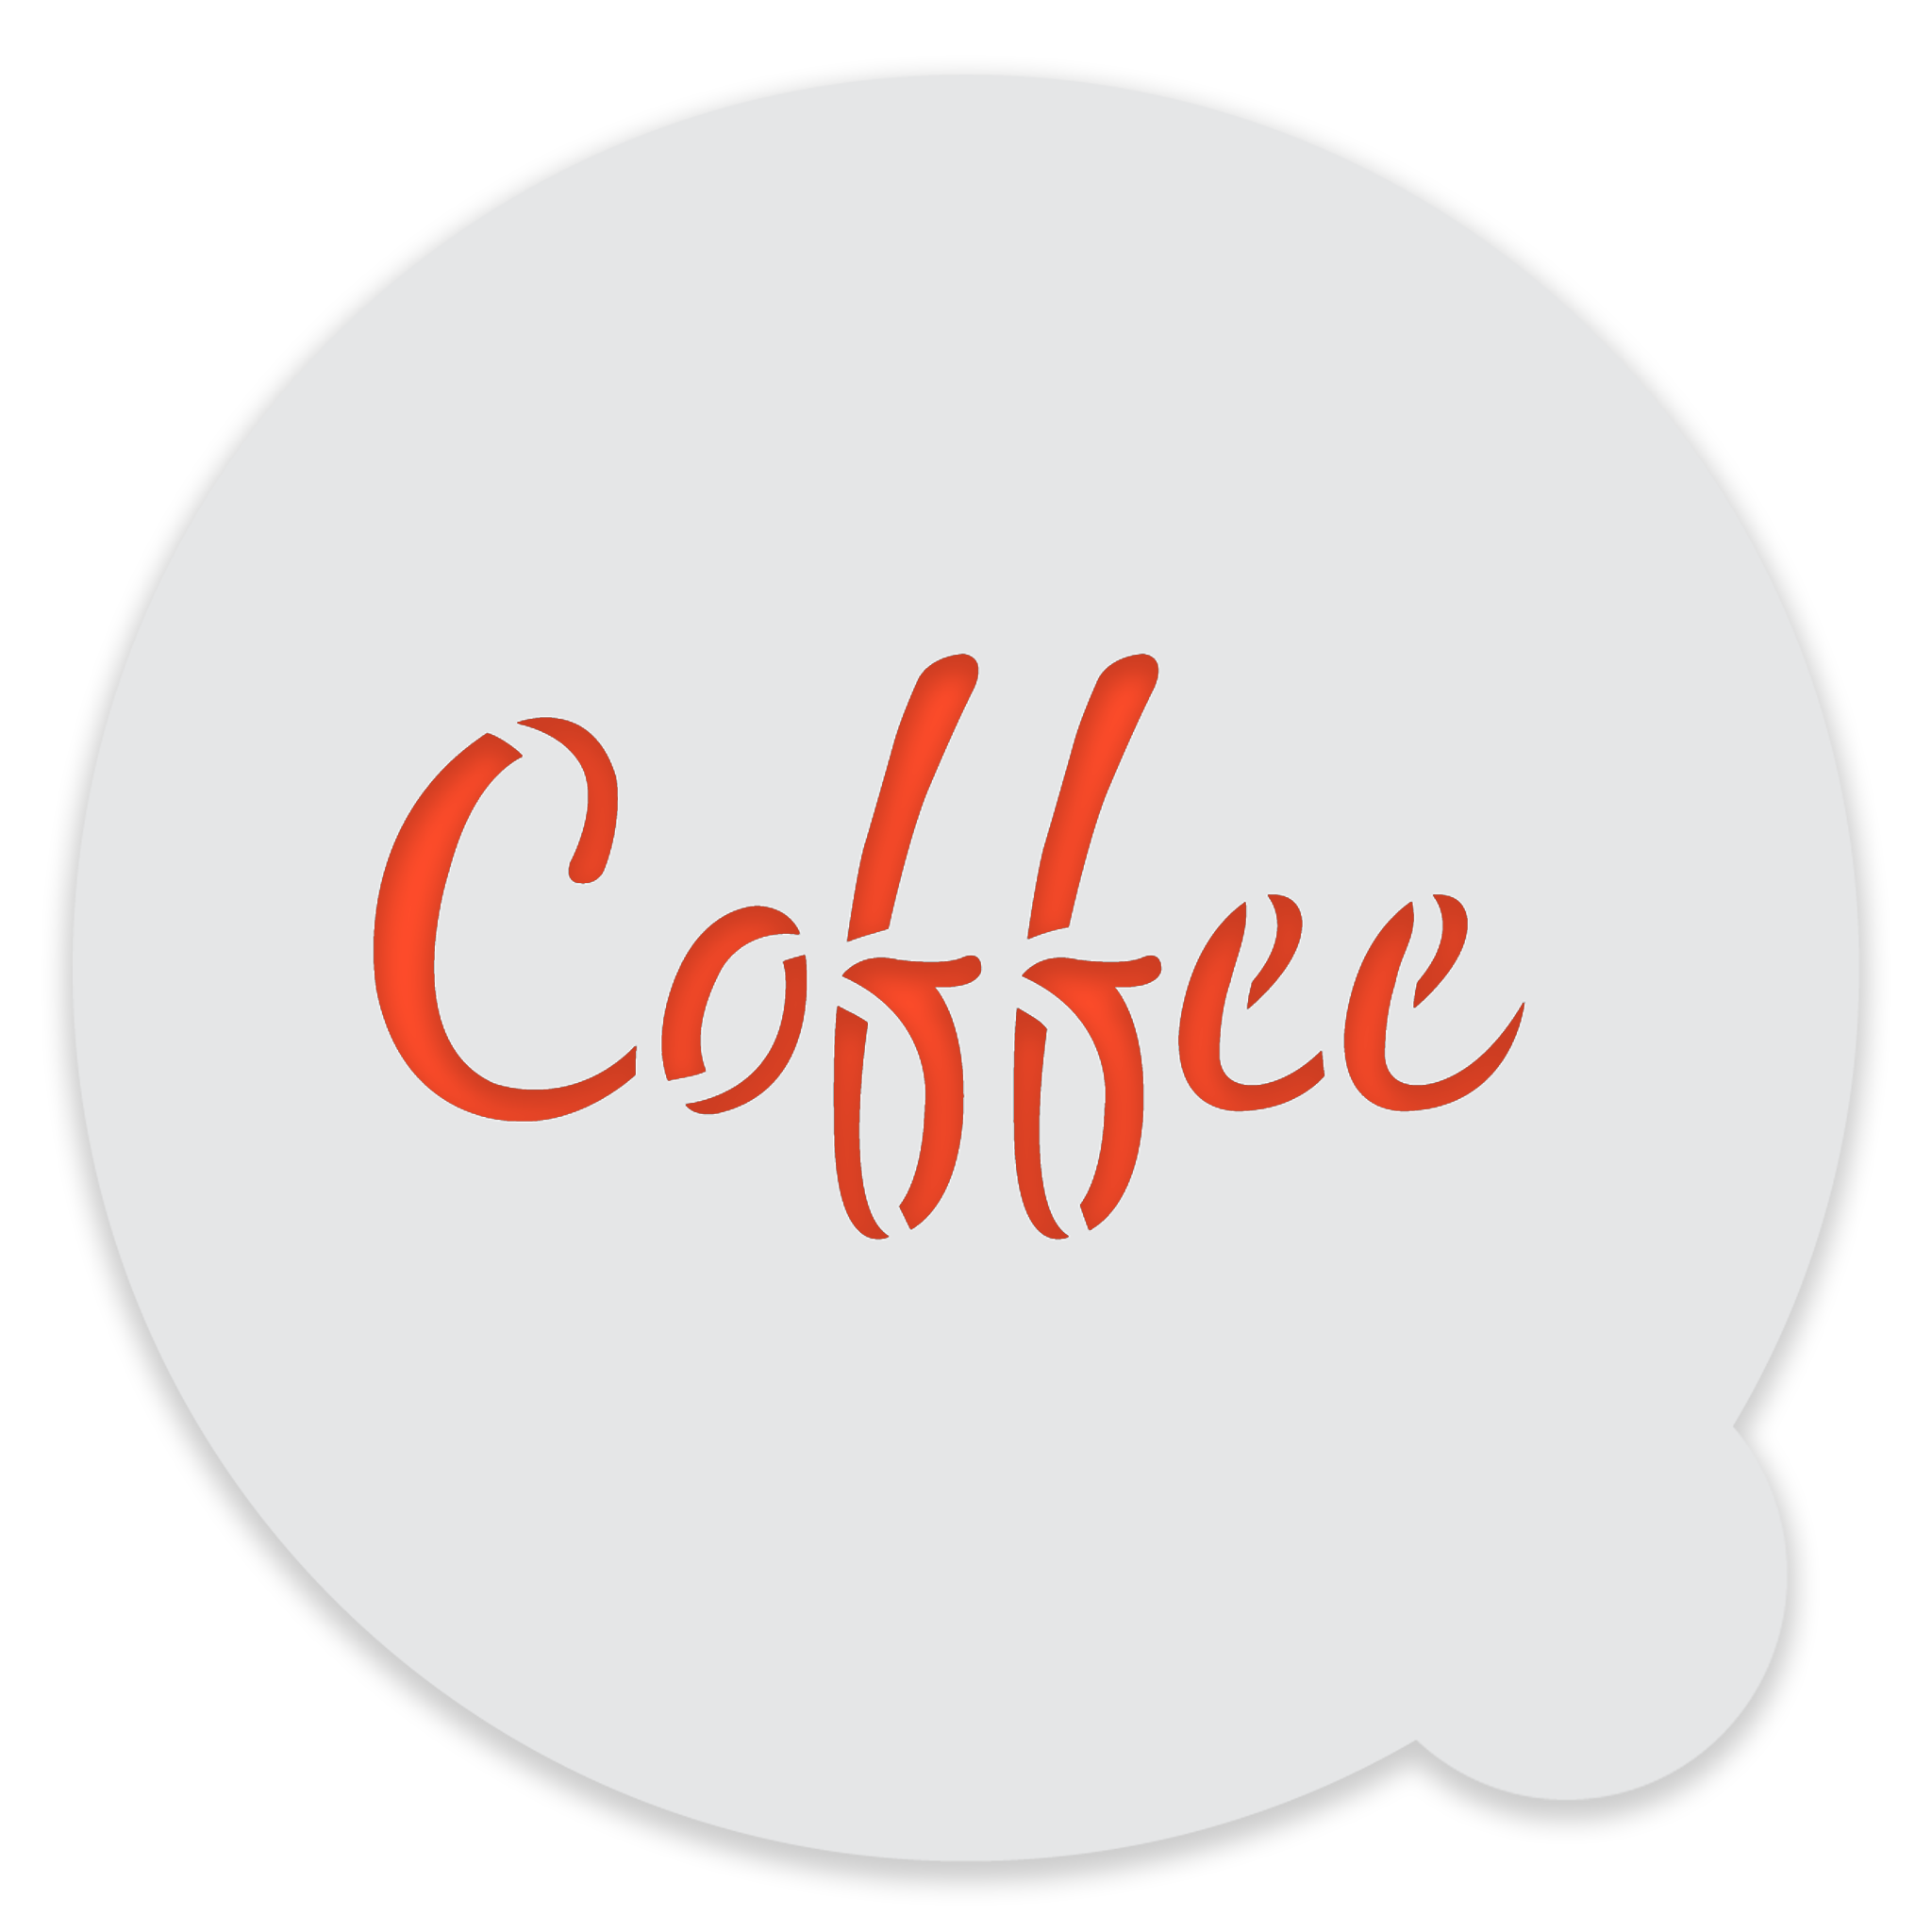 Cursive Text Coffee Stencil